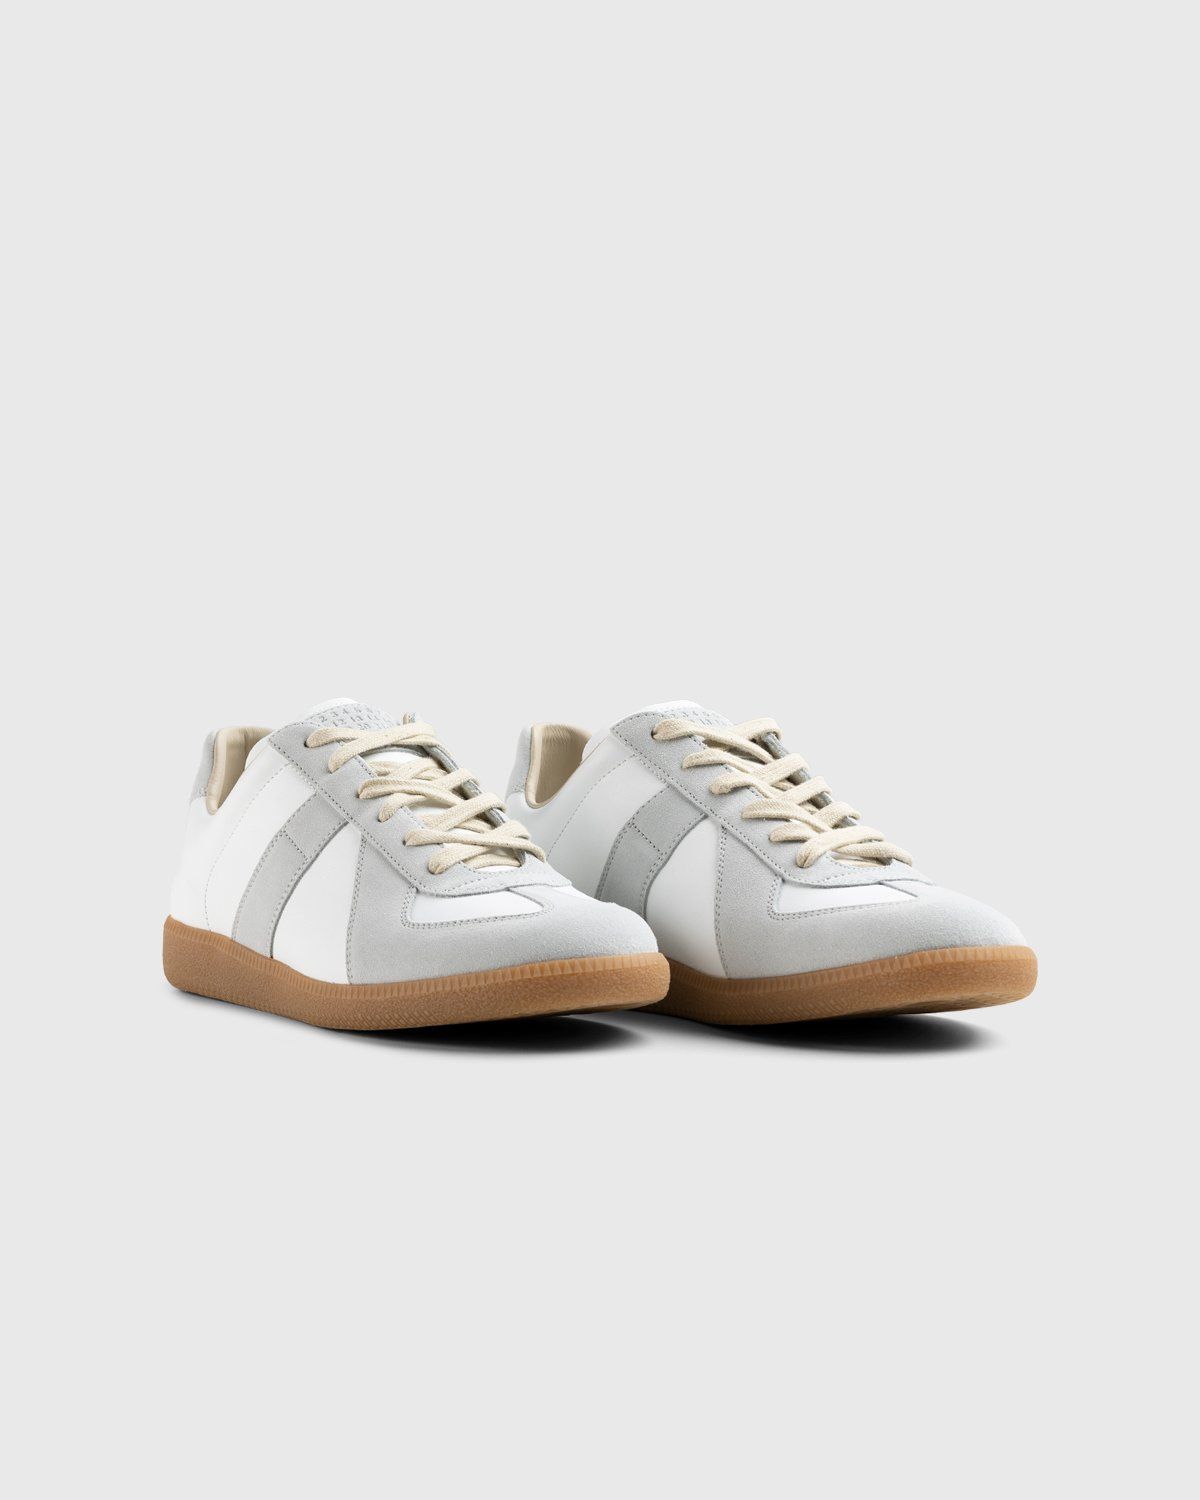 Maison Margiela – Calfskin Replica Sneakers Light Grey - Sneakers - Grey - Image 2